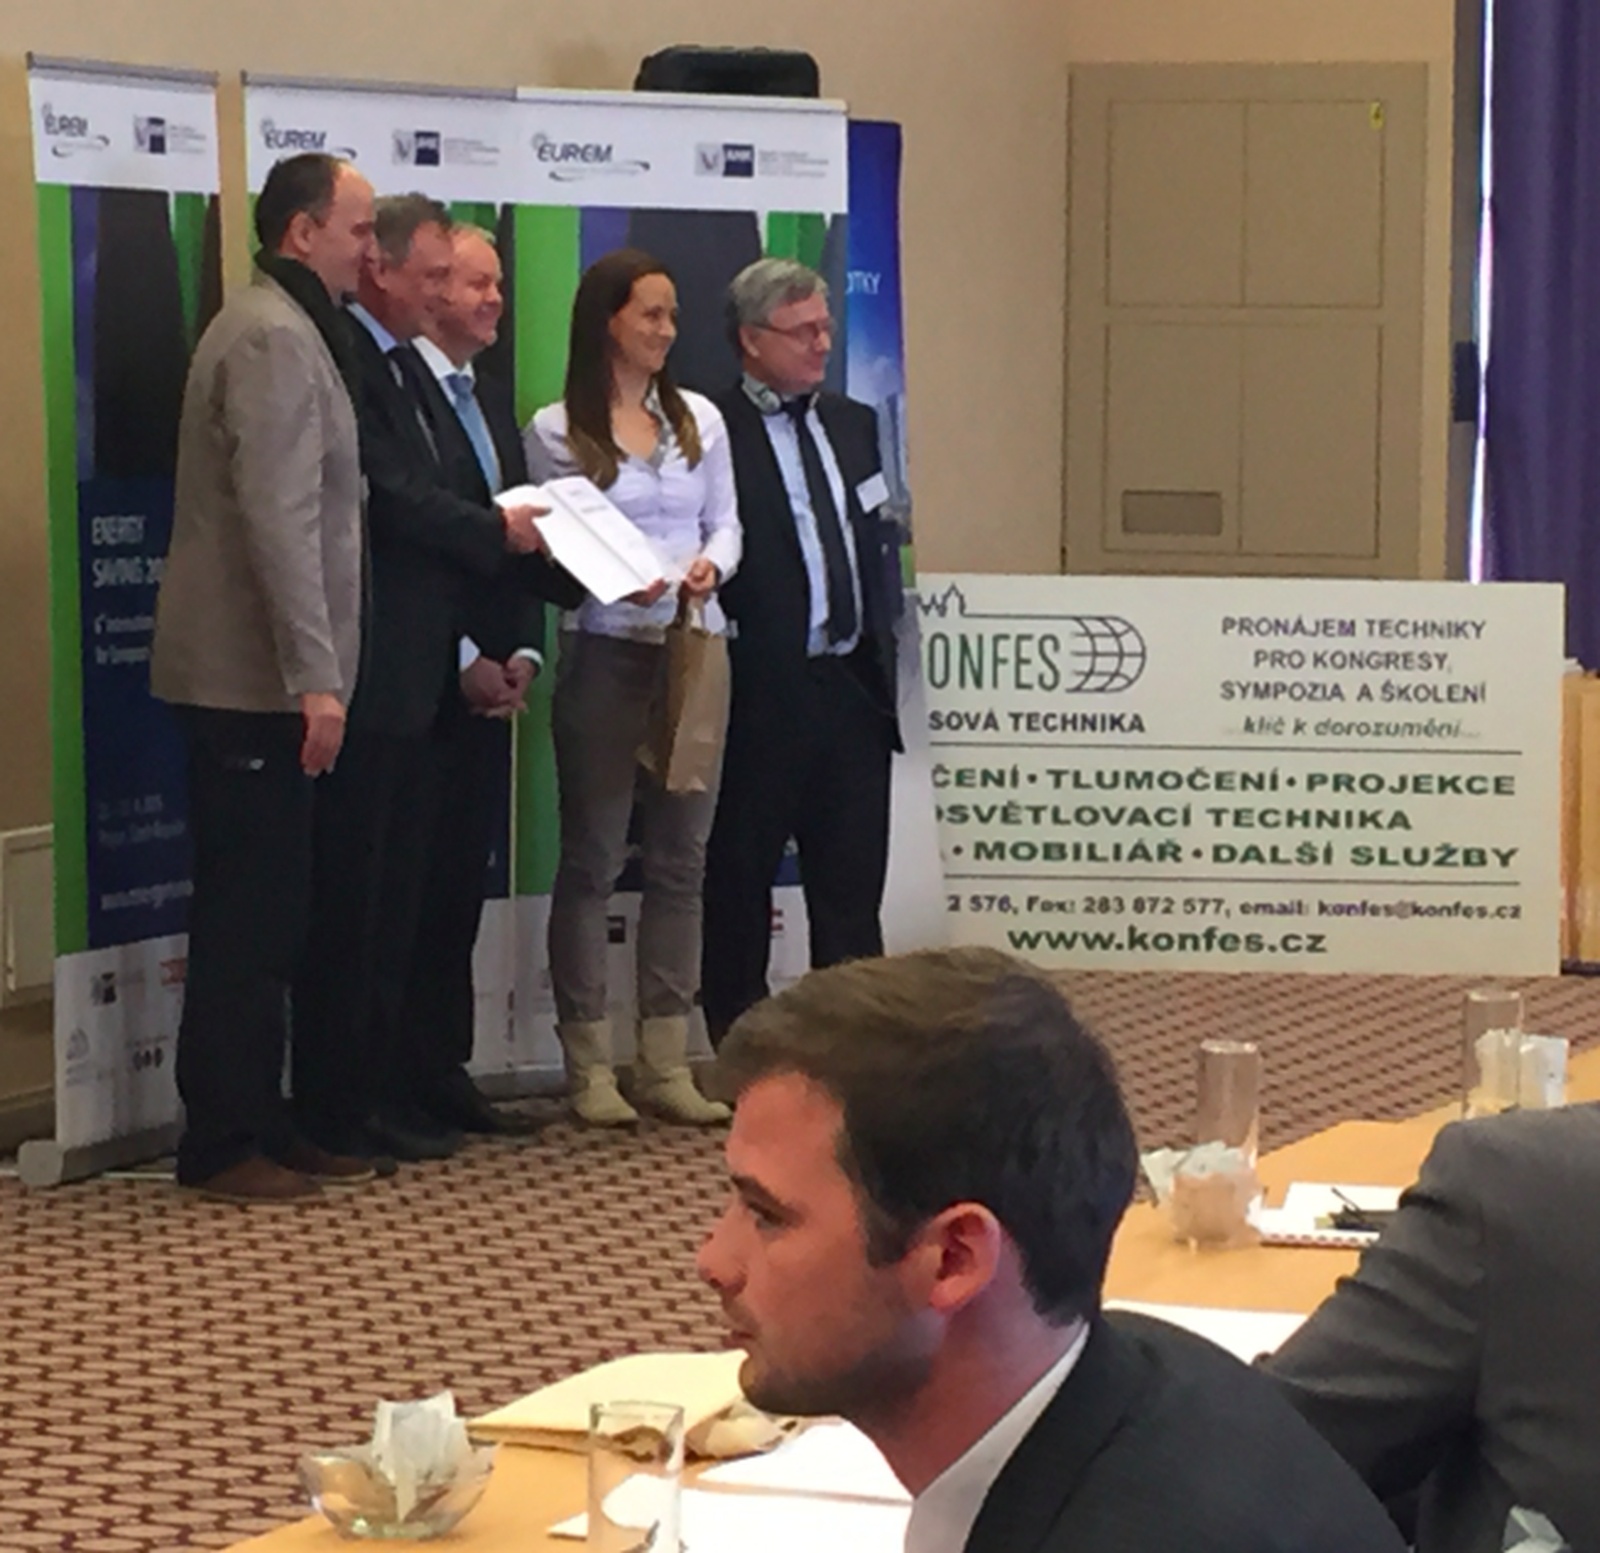 A graduate of the University of Nova Gorica, Ivana Kacafura, received an award for the best energy concept